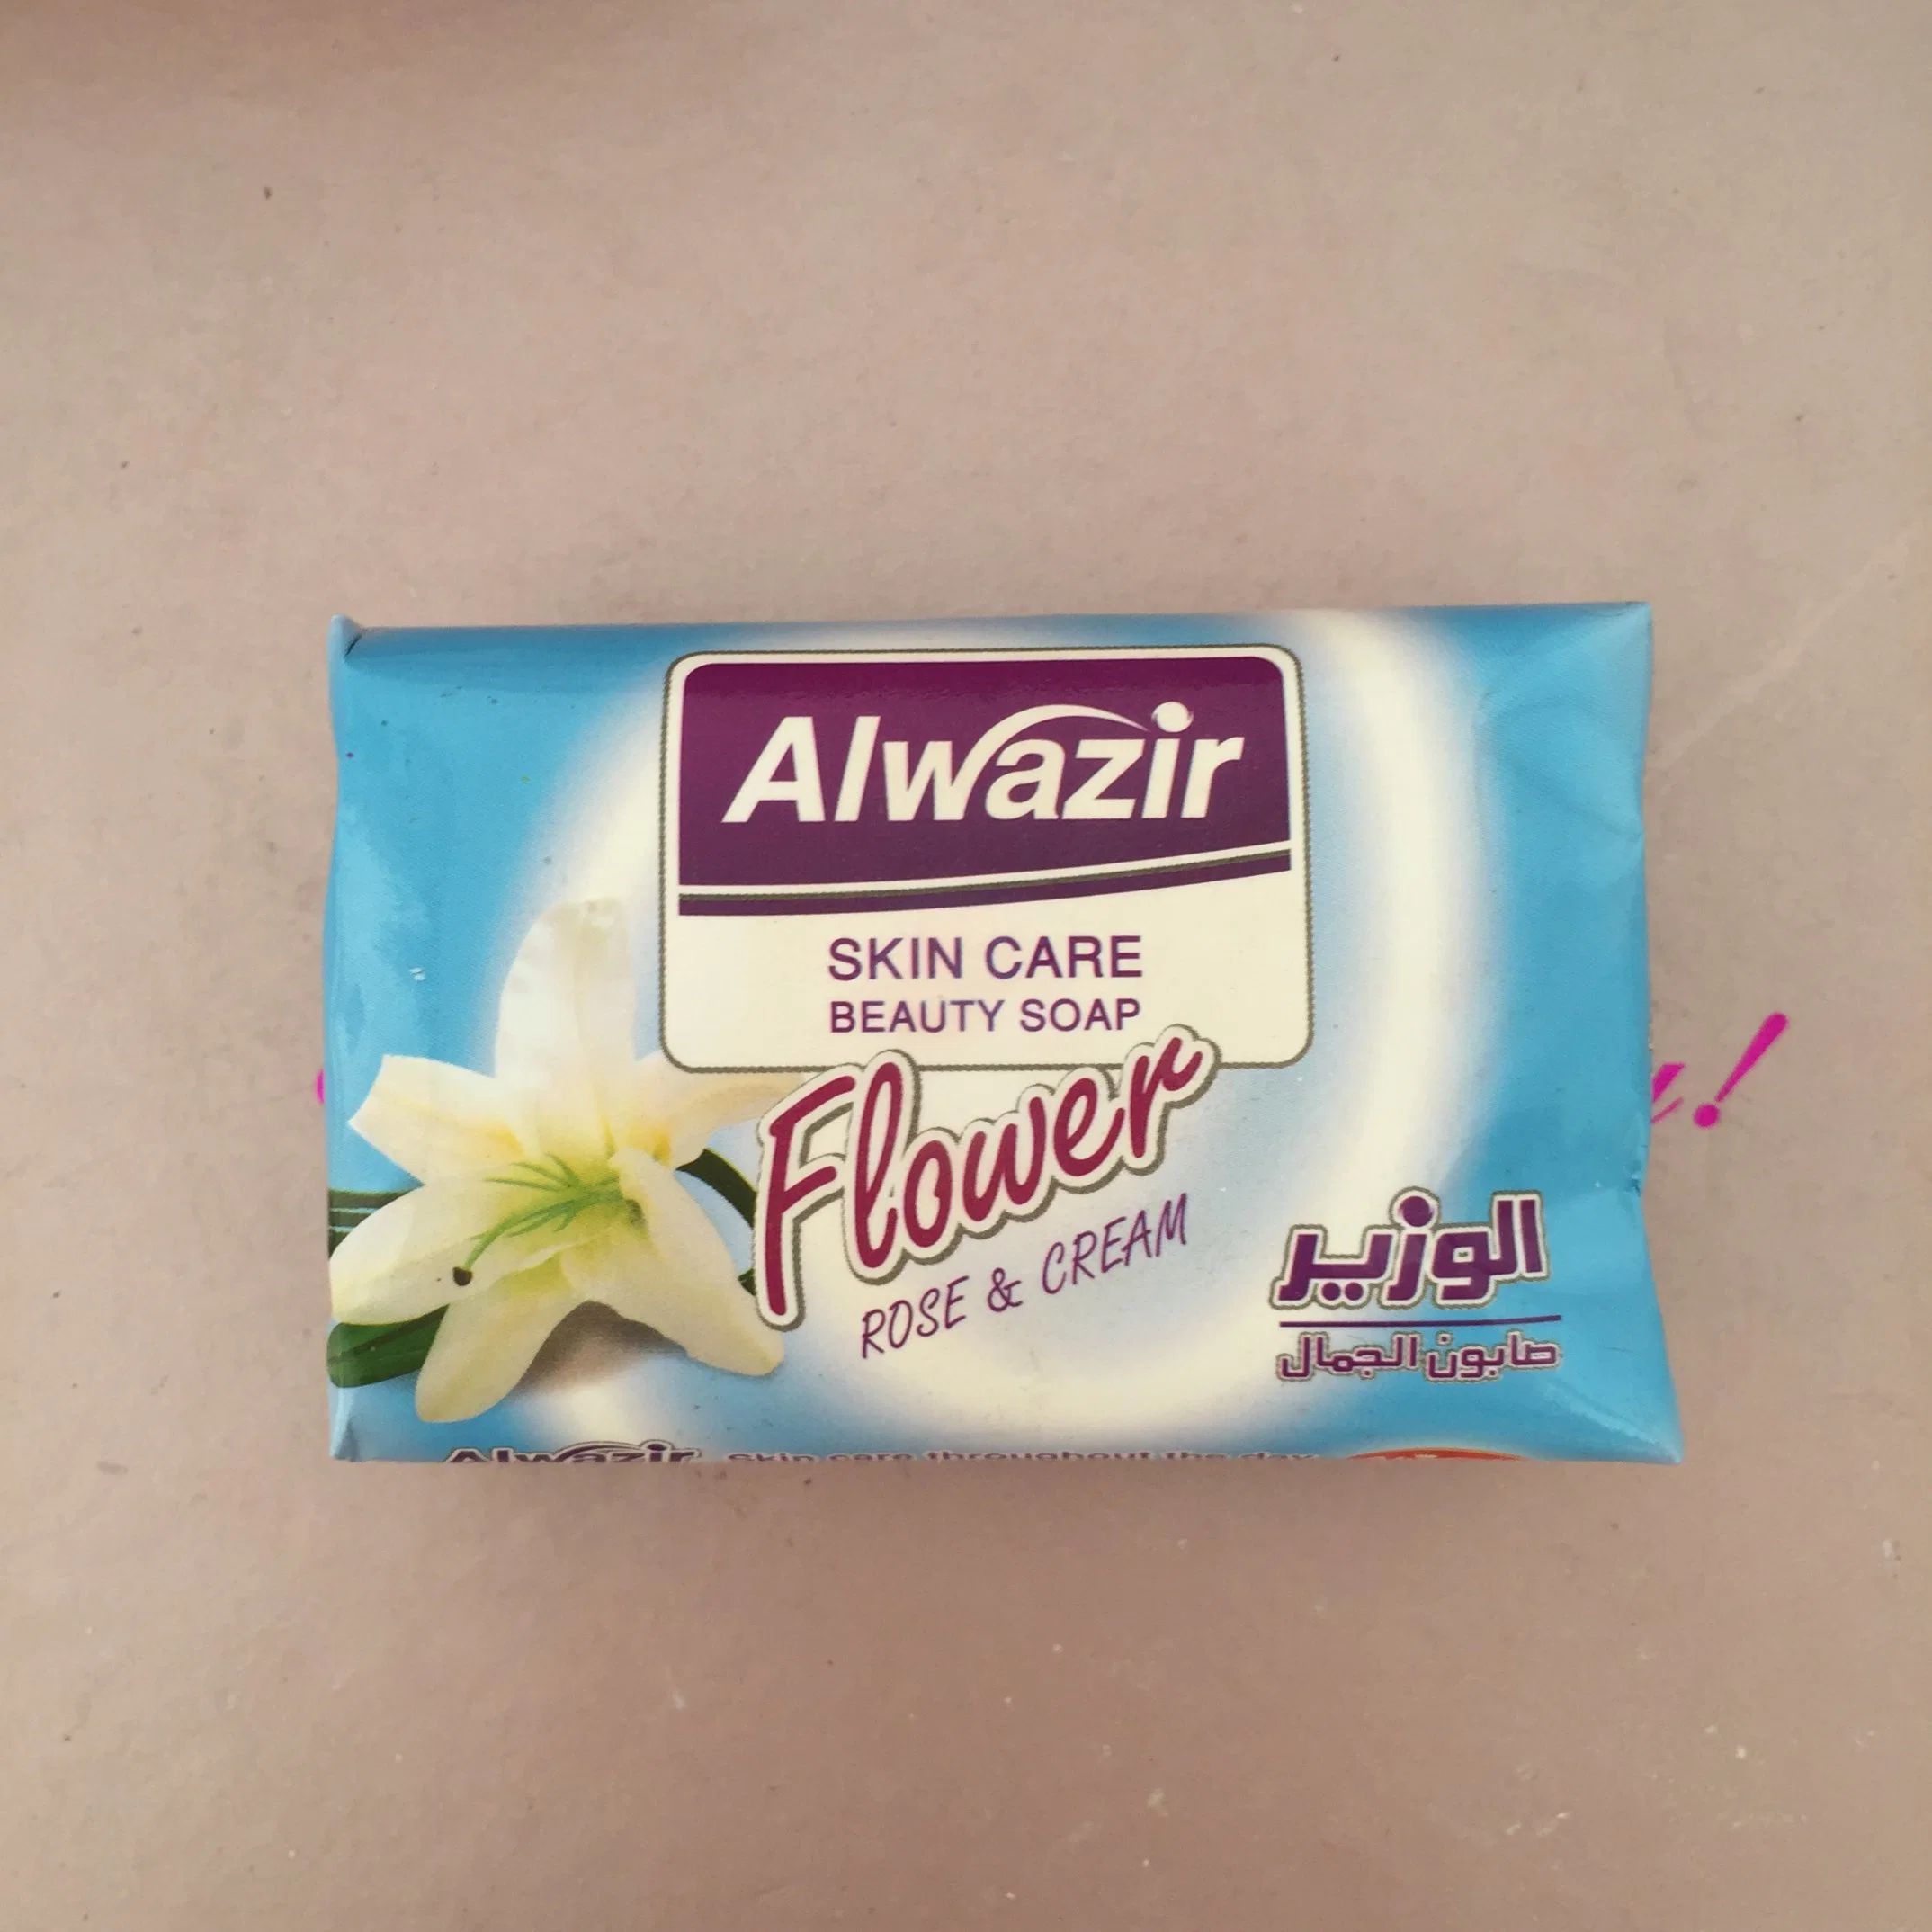 70g Flower Paper Wrapper 6piece in a Plastic Package Beauty Soap